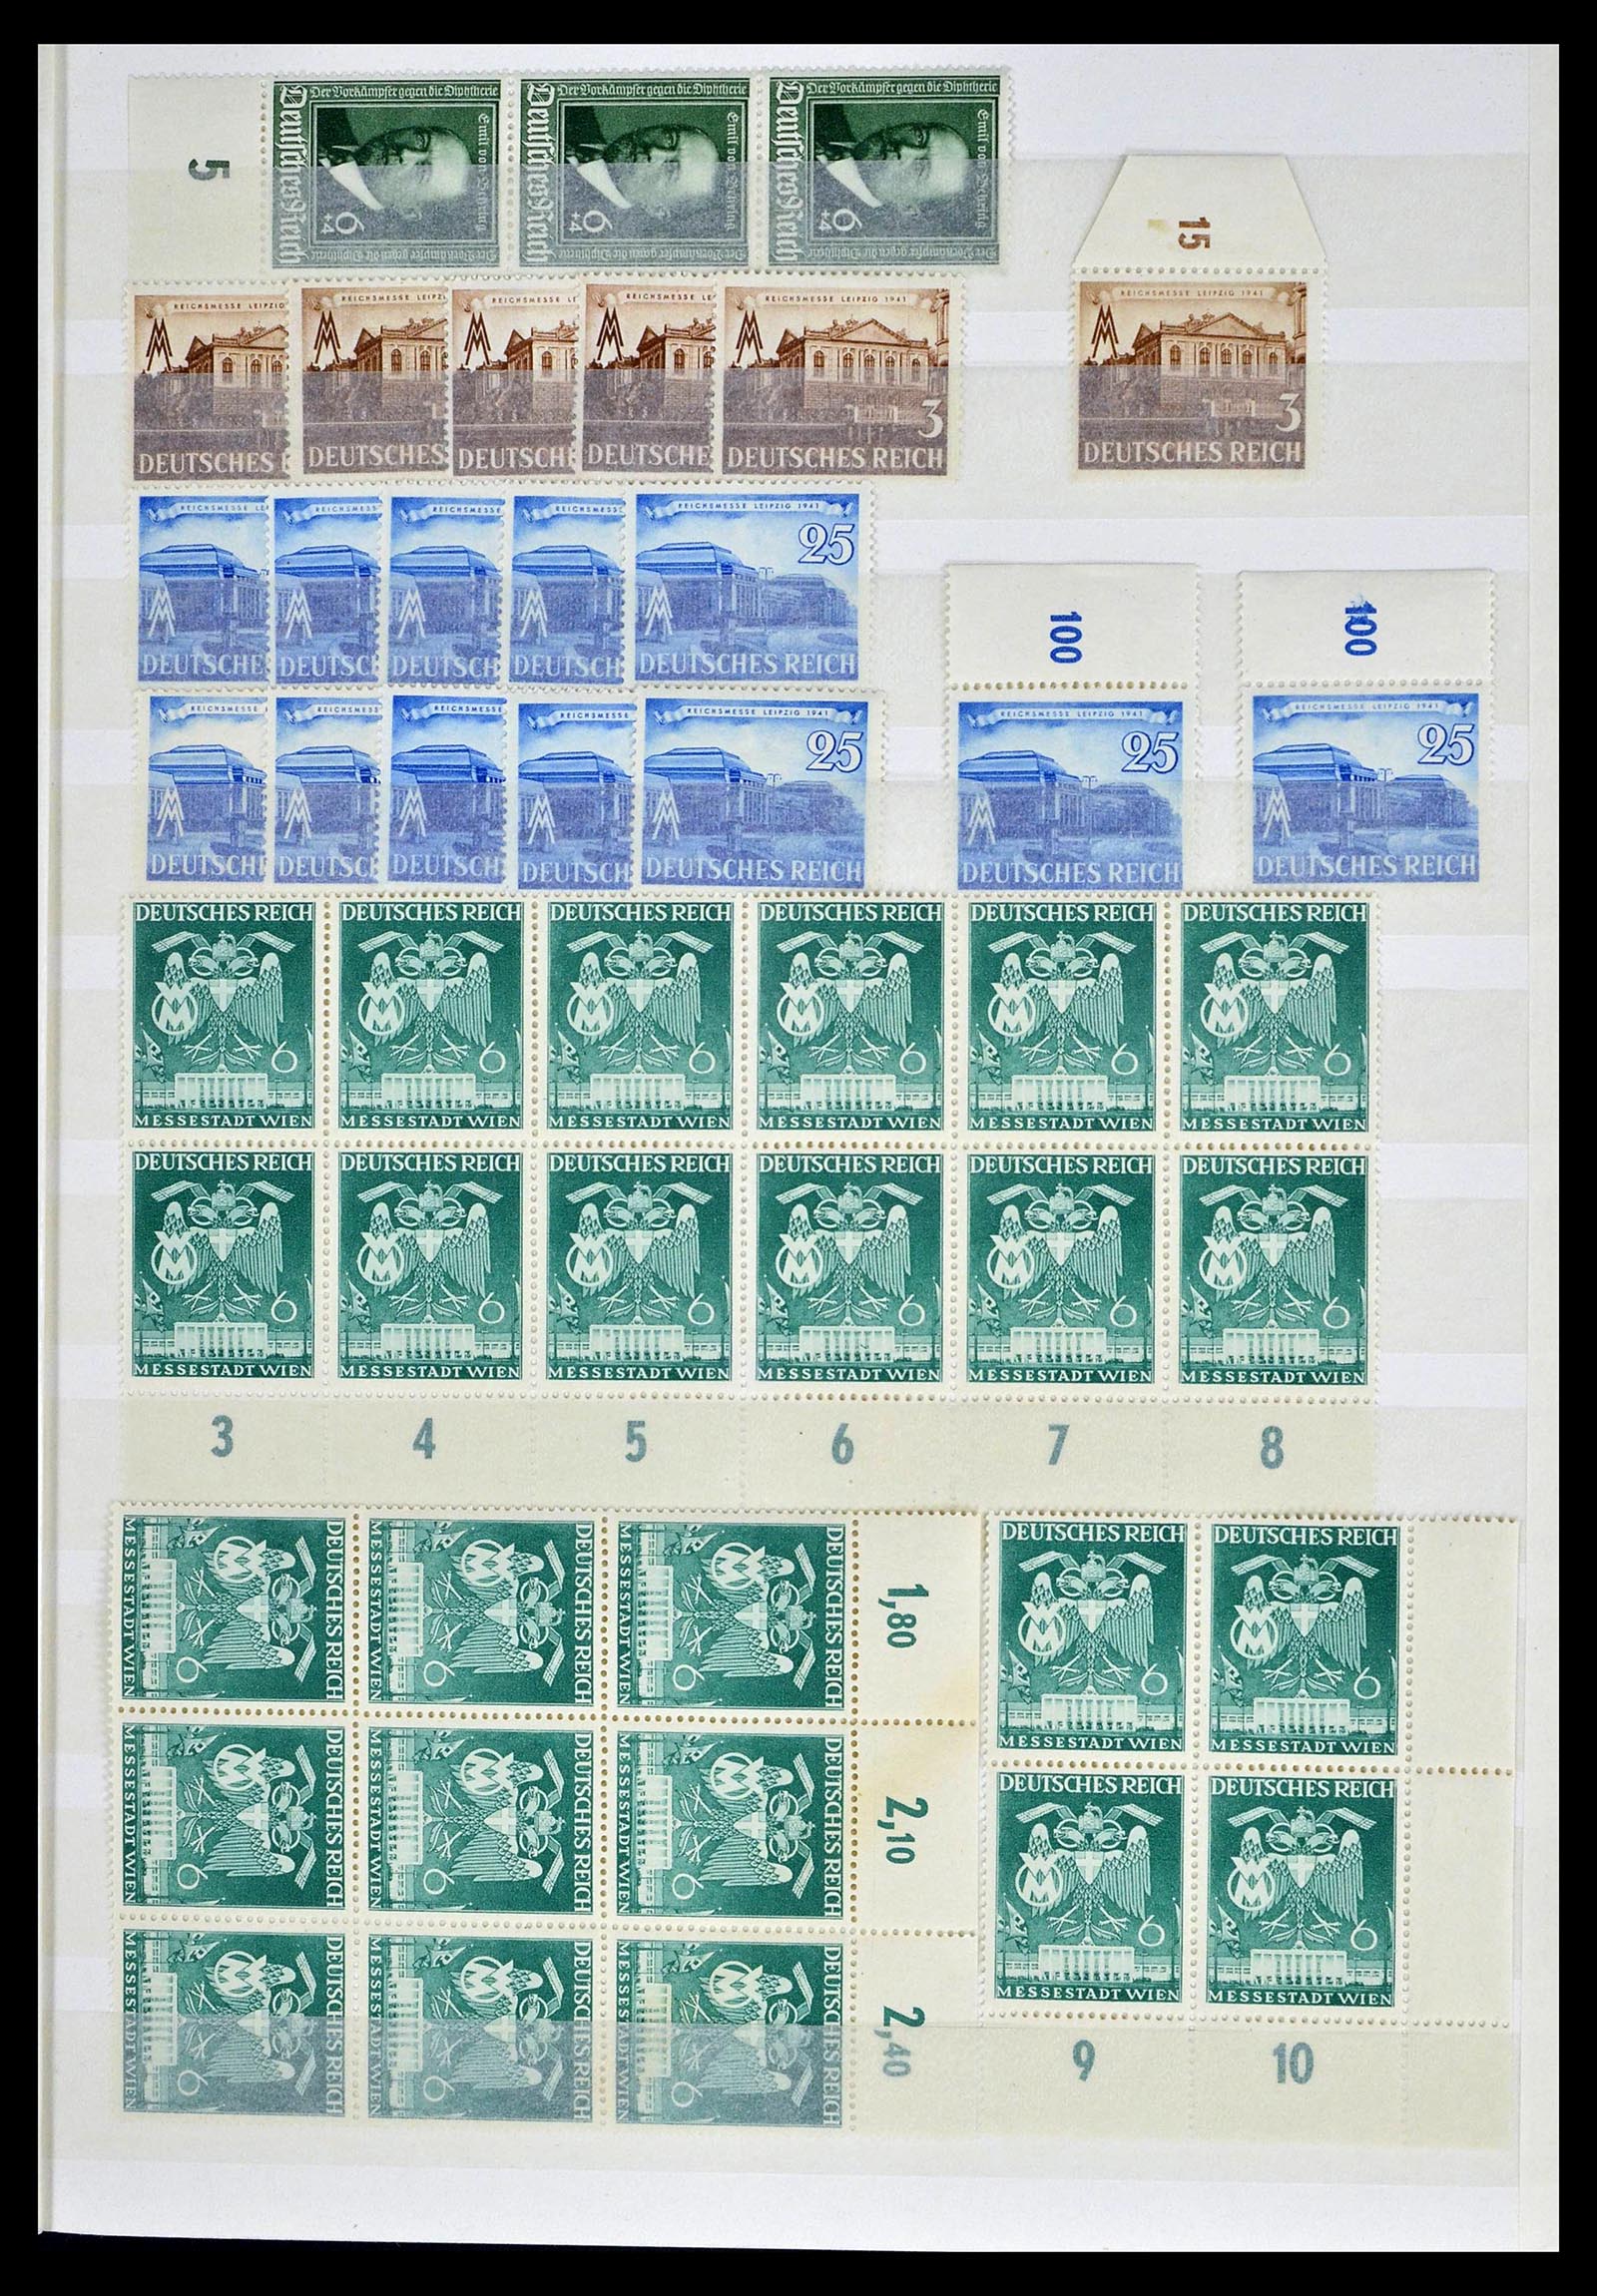 39256 0045 - Stamp collection 39256 German Reich MNH.